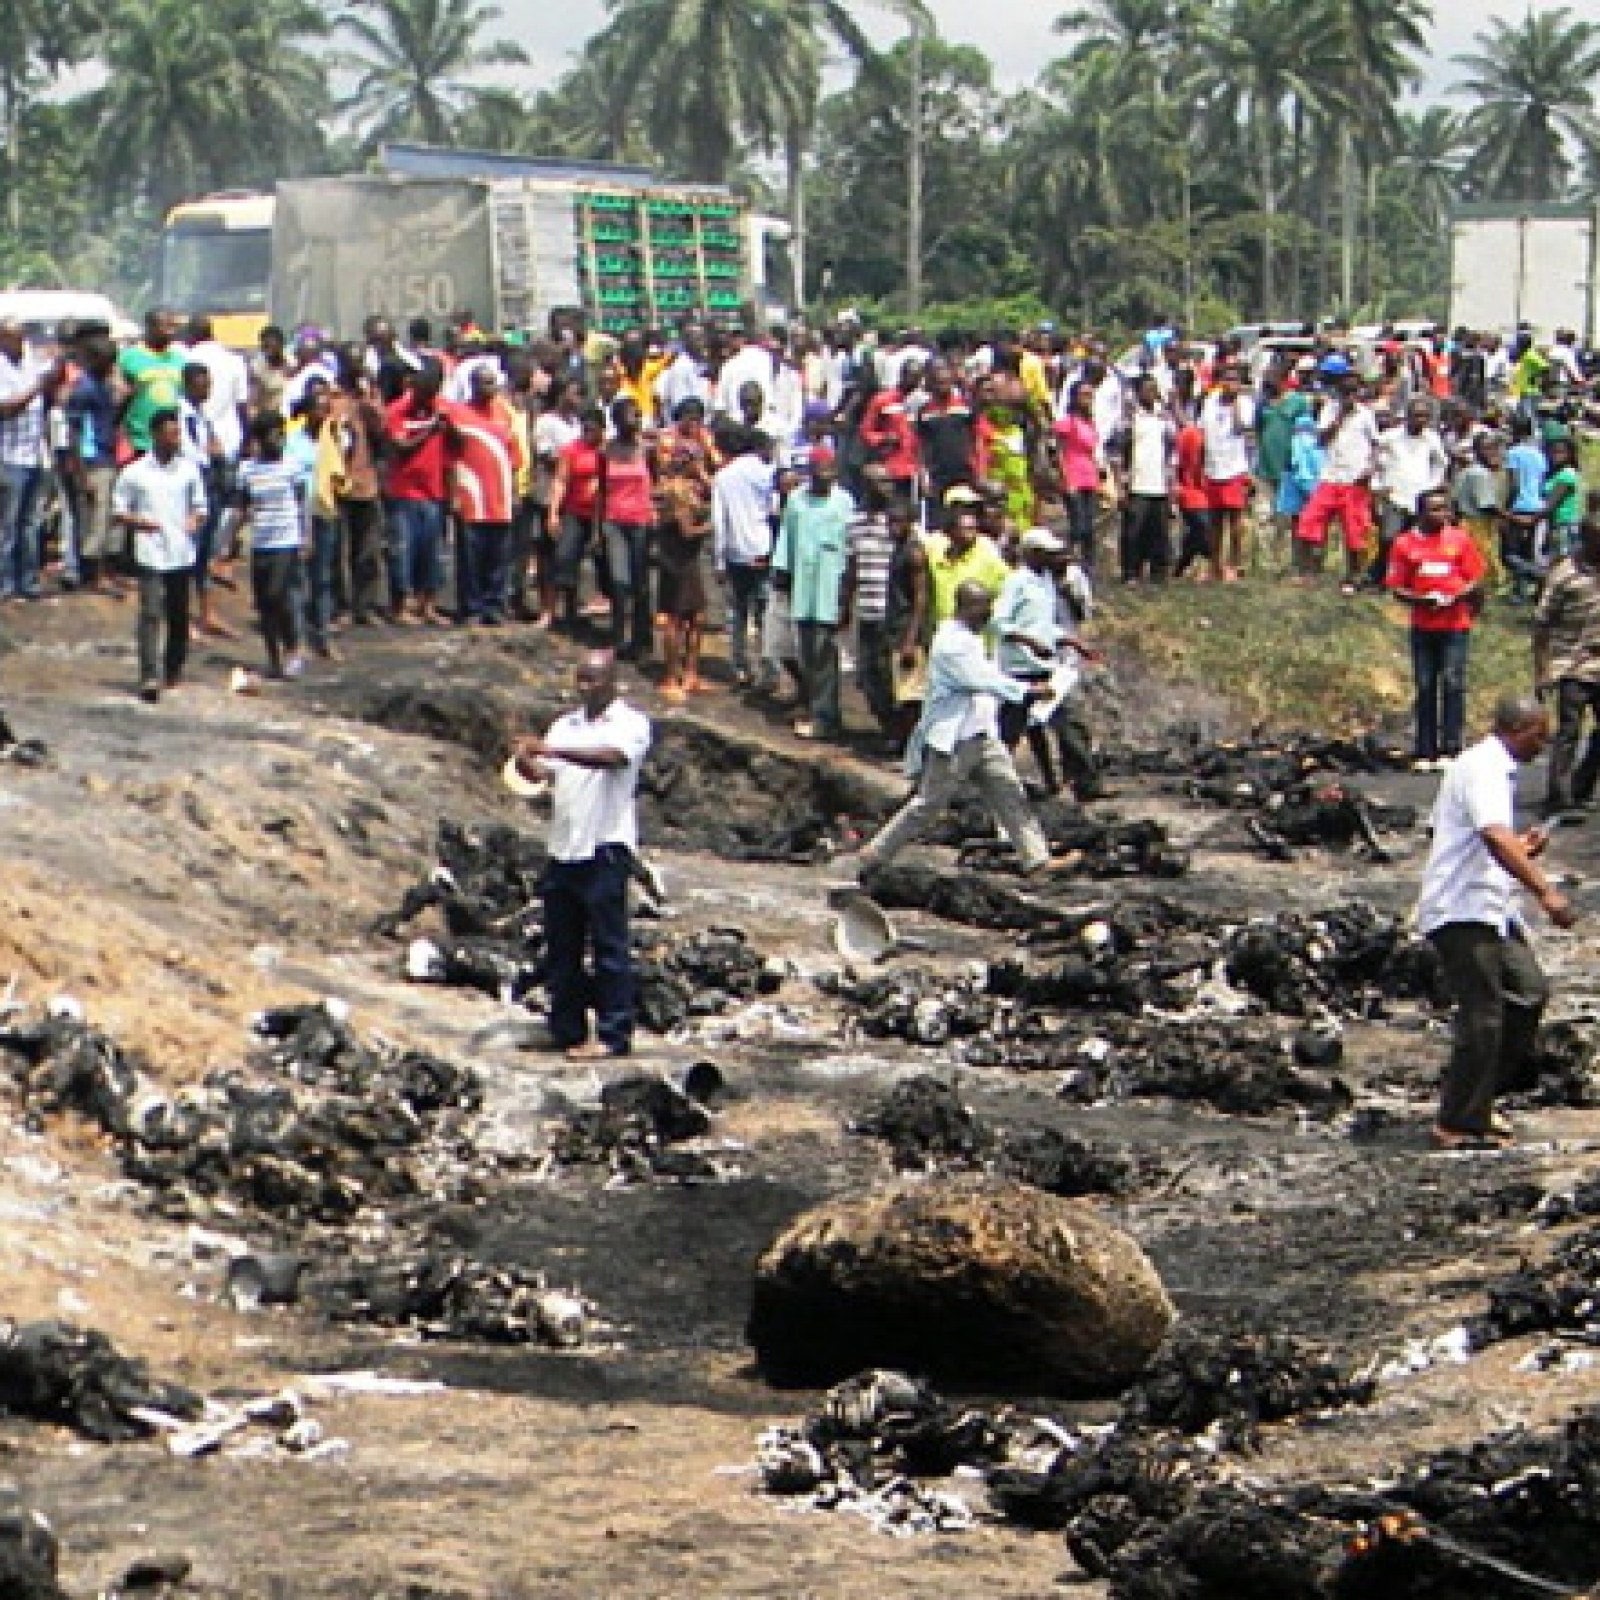 1998 Jesse Pipeline Explosion in Nigeria Kills Over 200